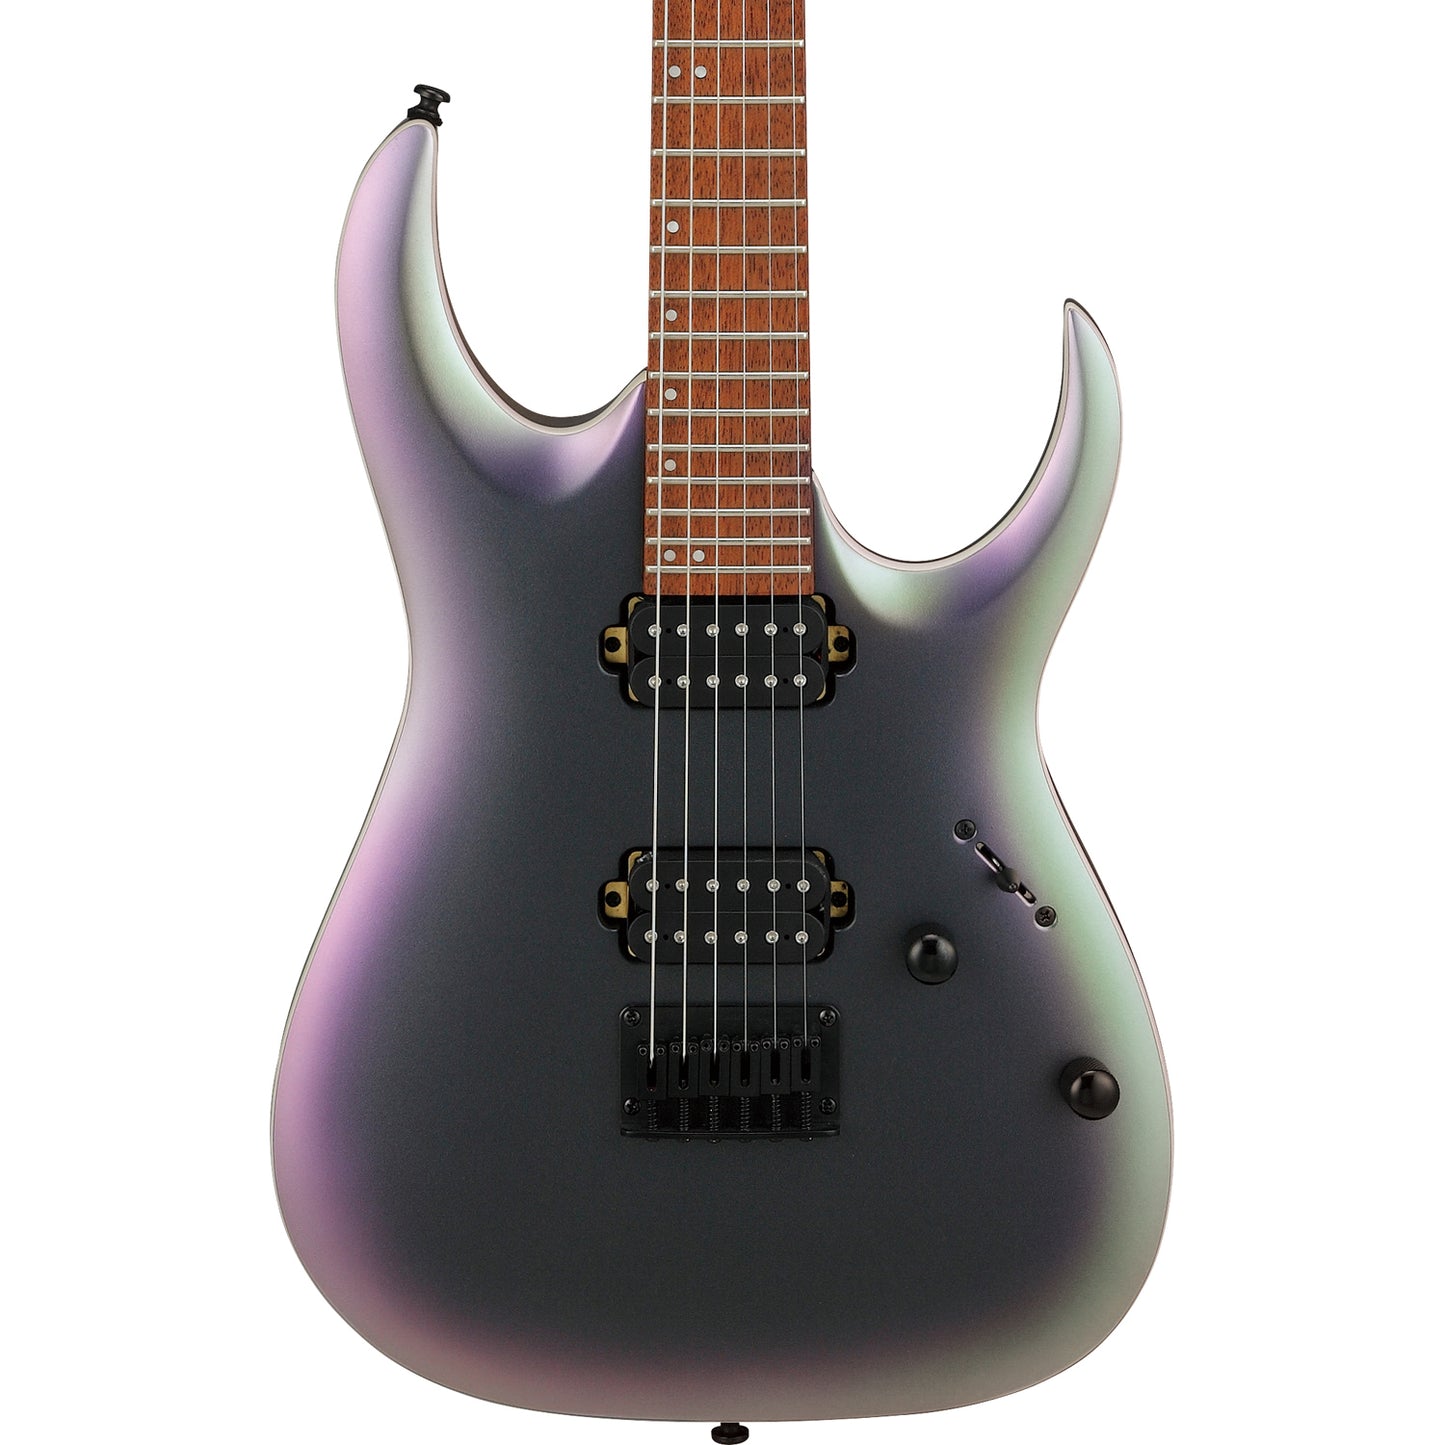 Ibanez RGA42EXBAM 6-String Electric Guitar, Black Aurora Burst Matte